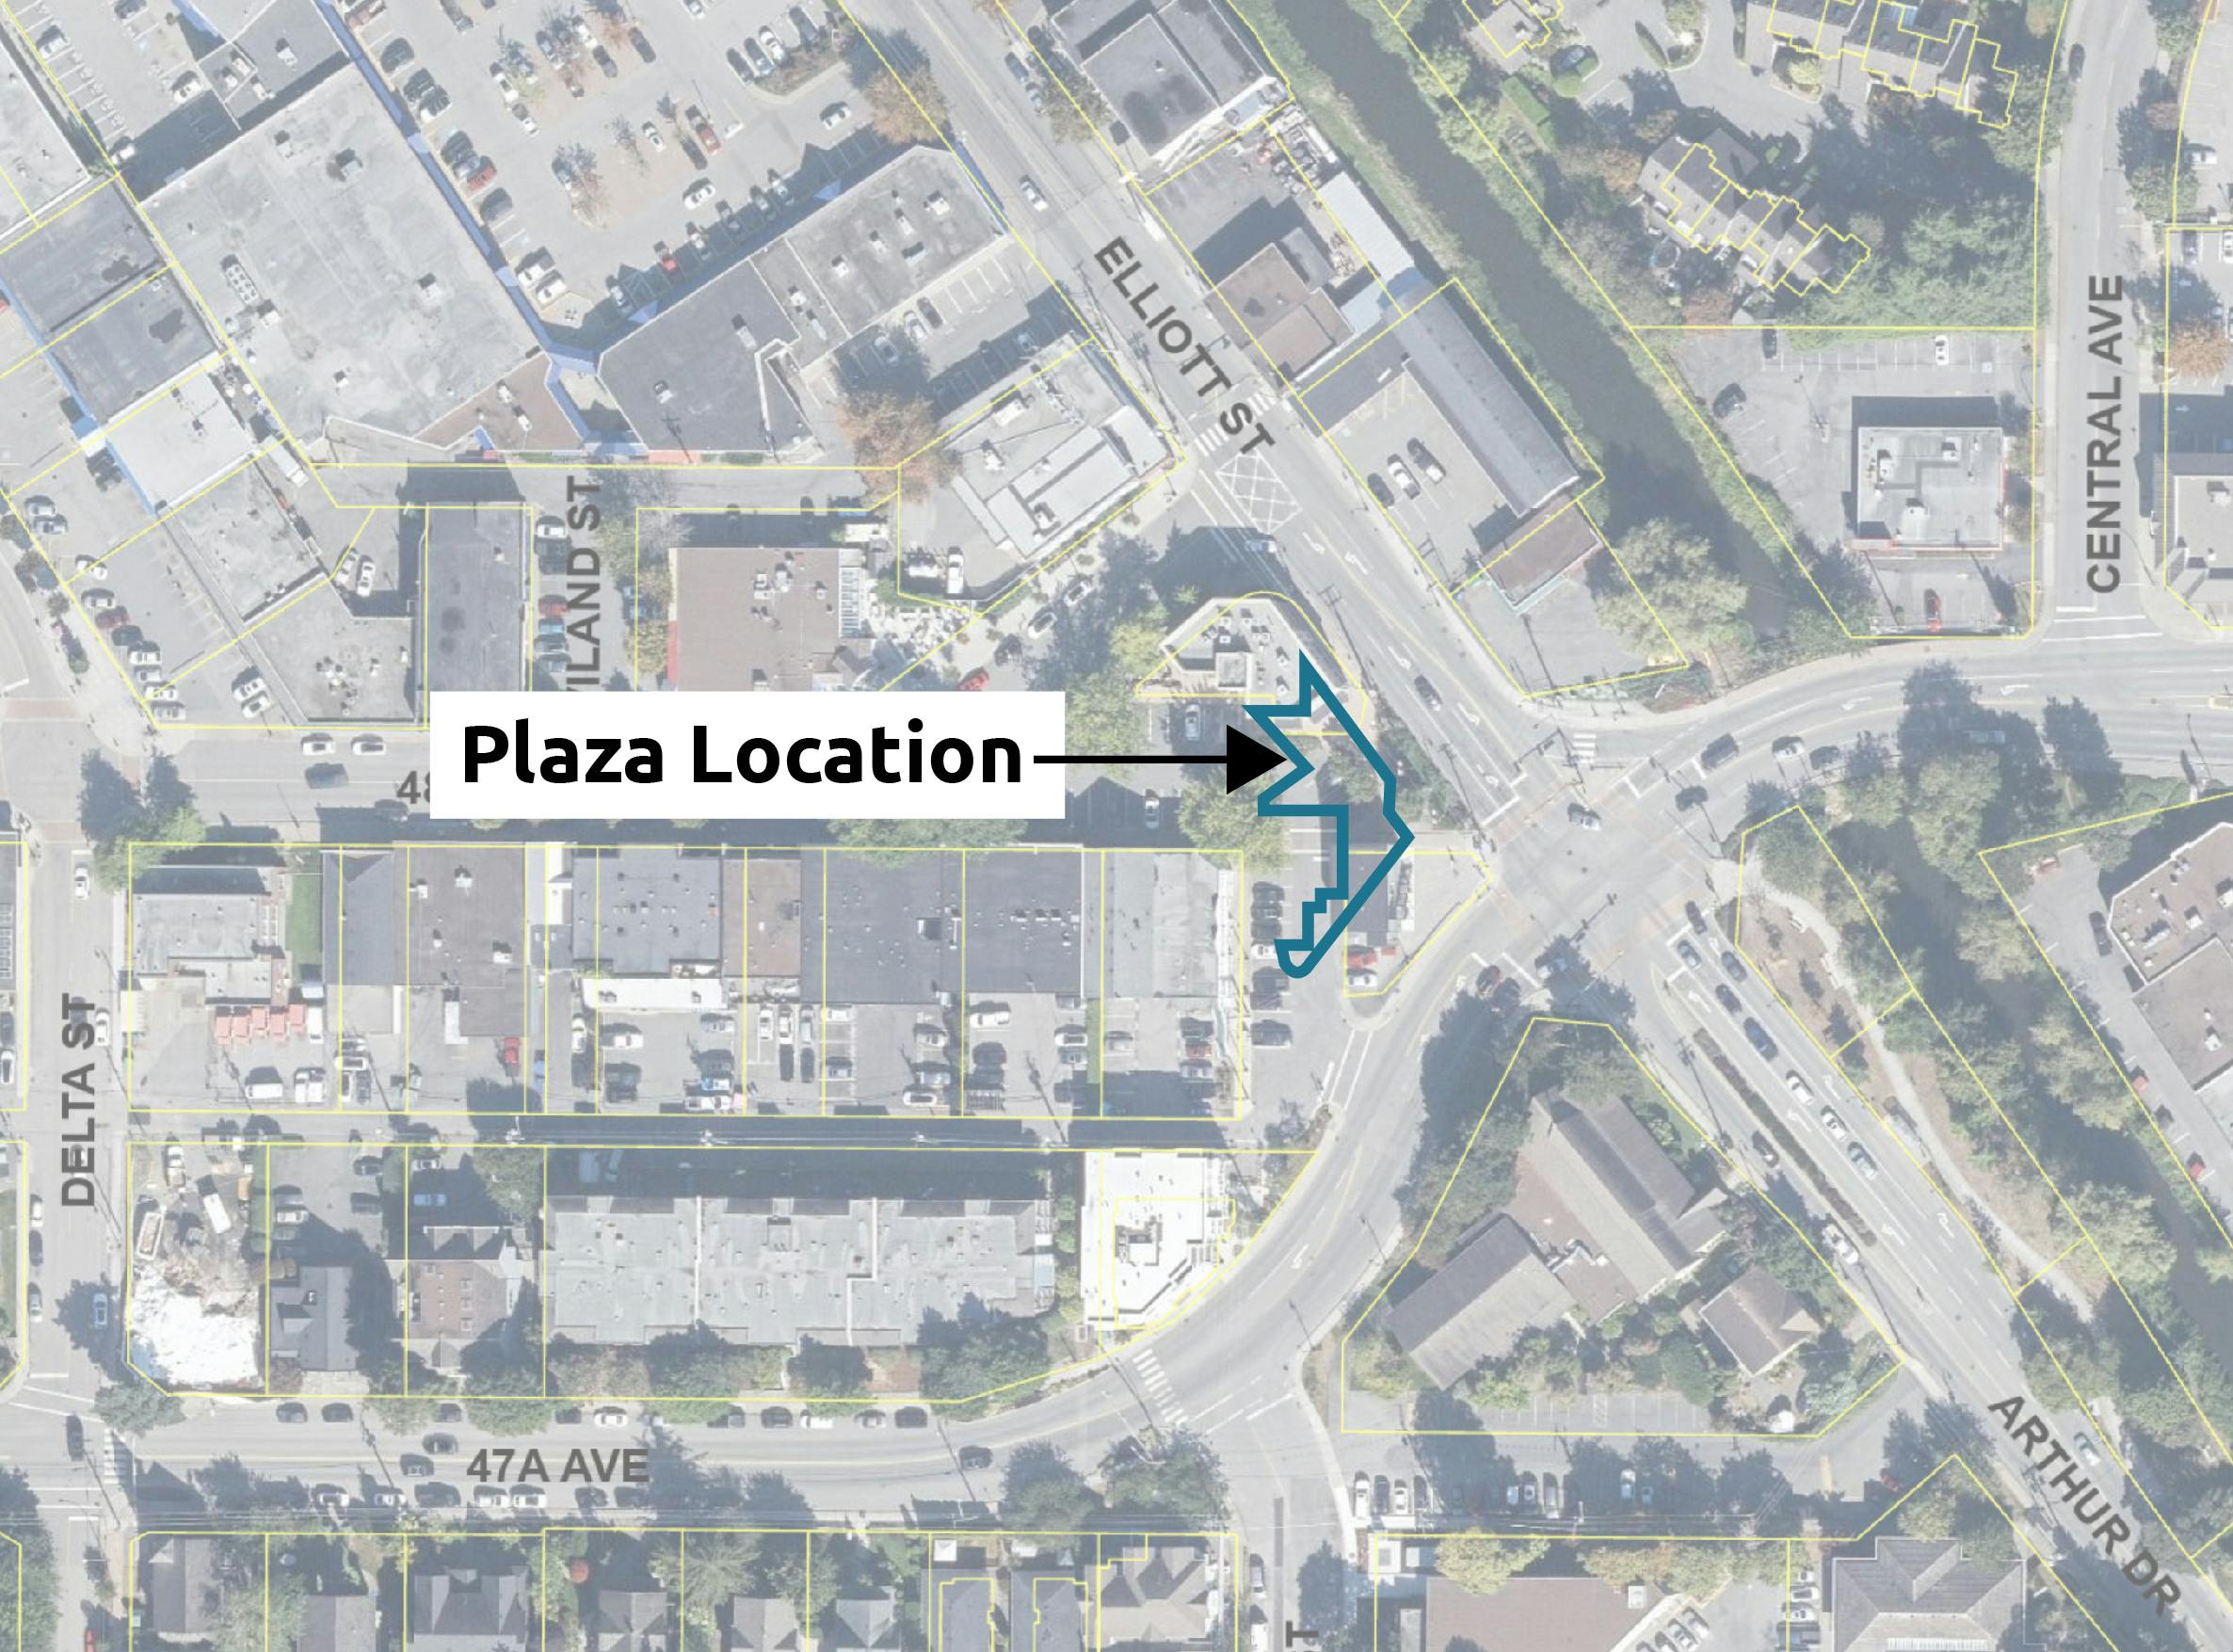 Plaza Location: Context